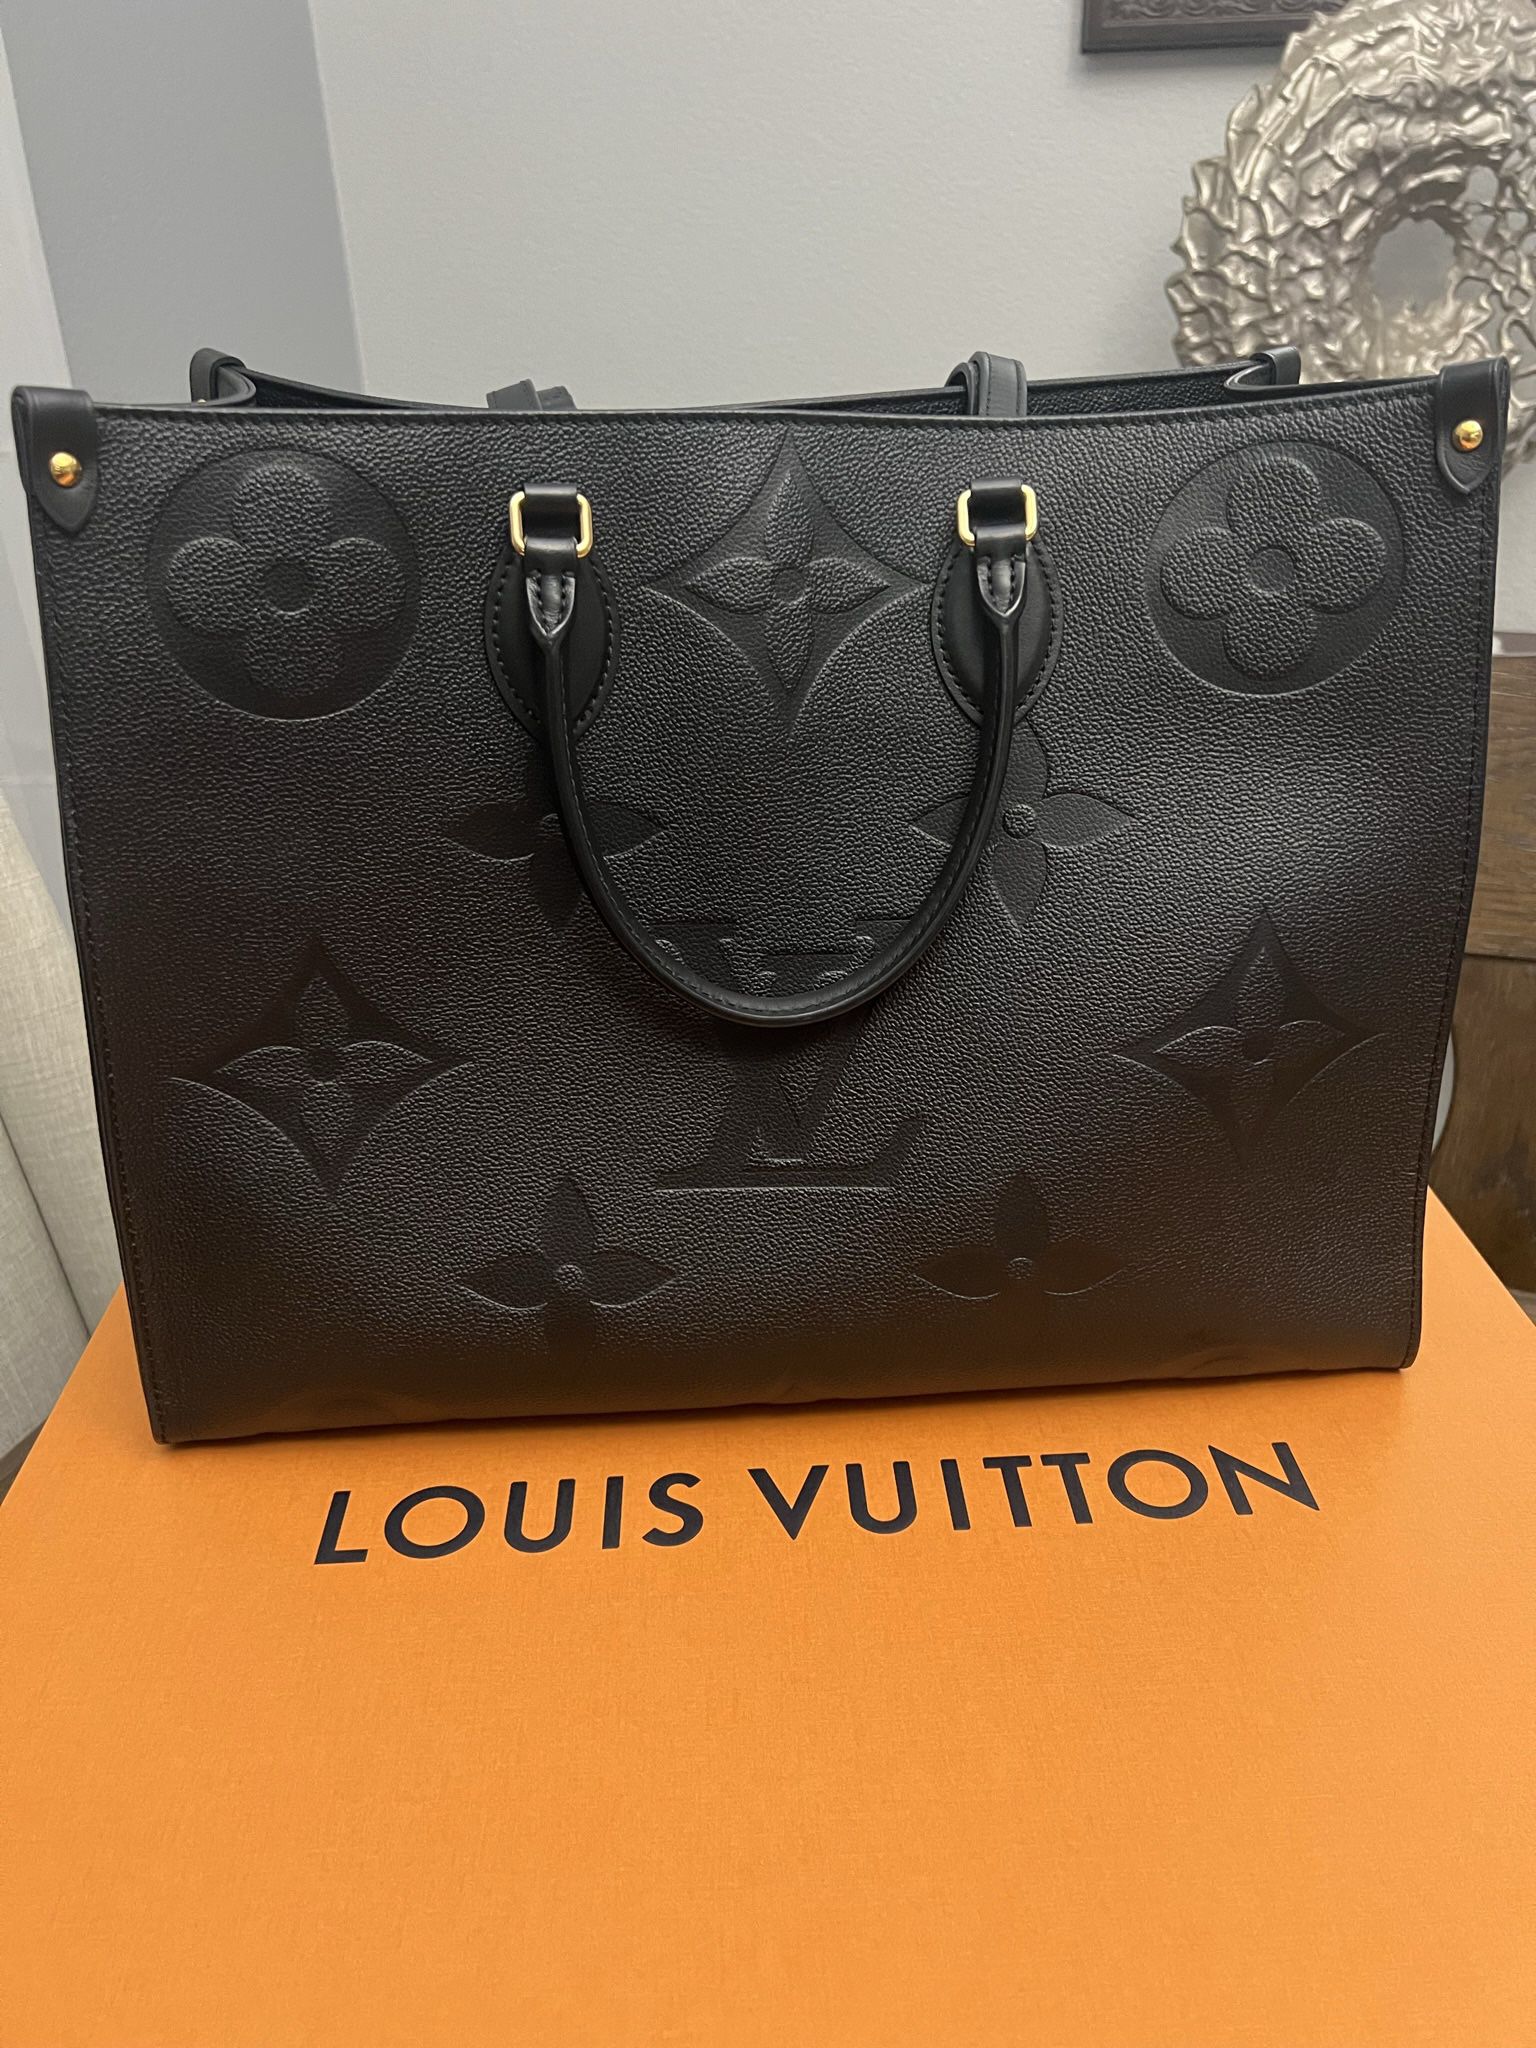 Louis Vuitton Handbag for Sale in Temecula, CA - OfferUp